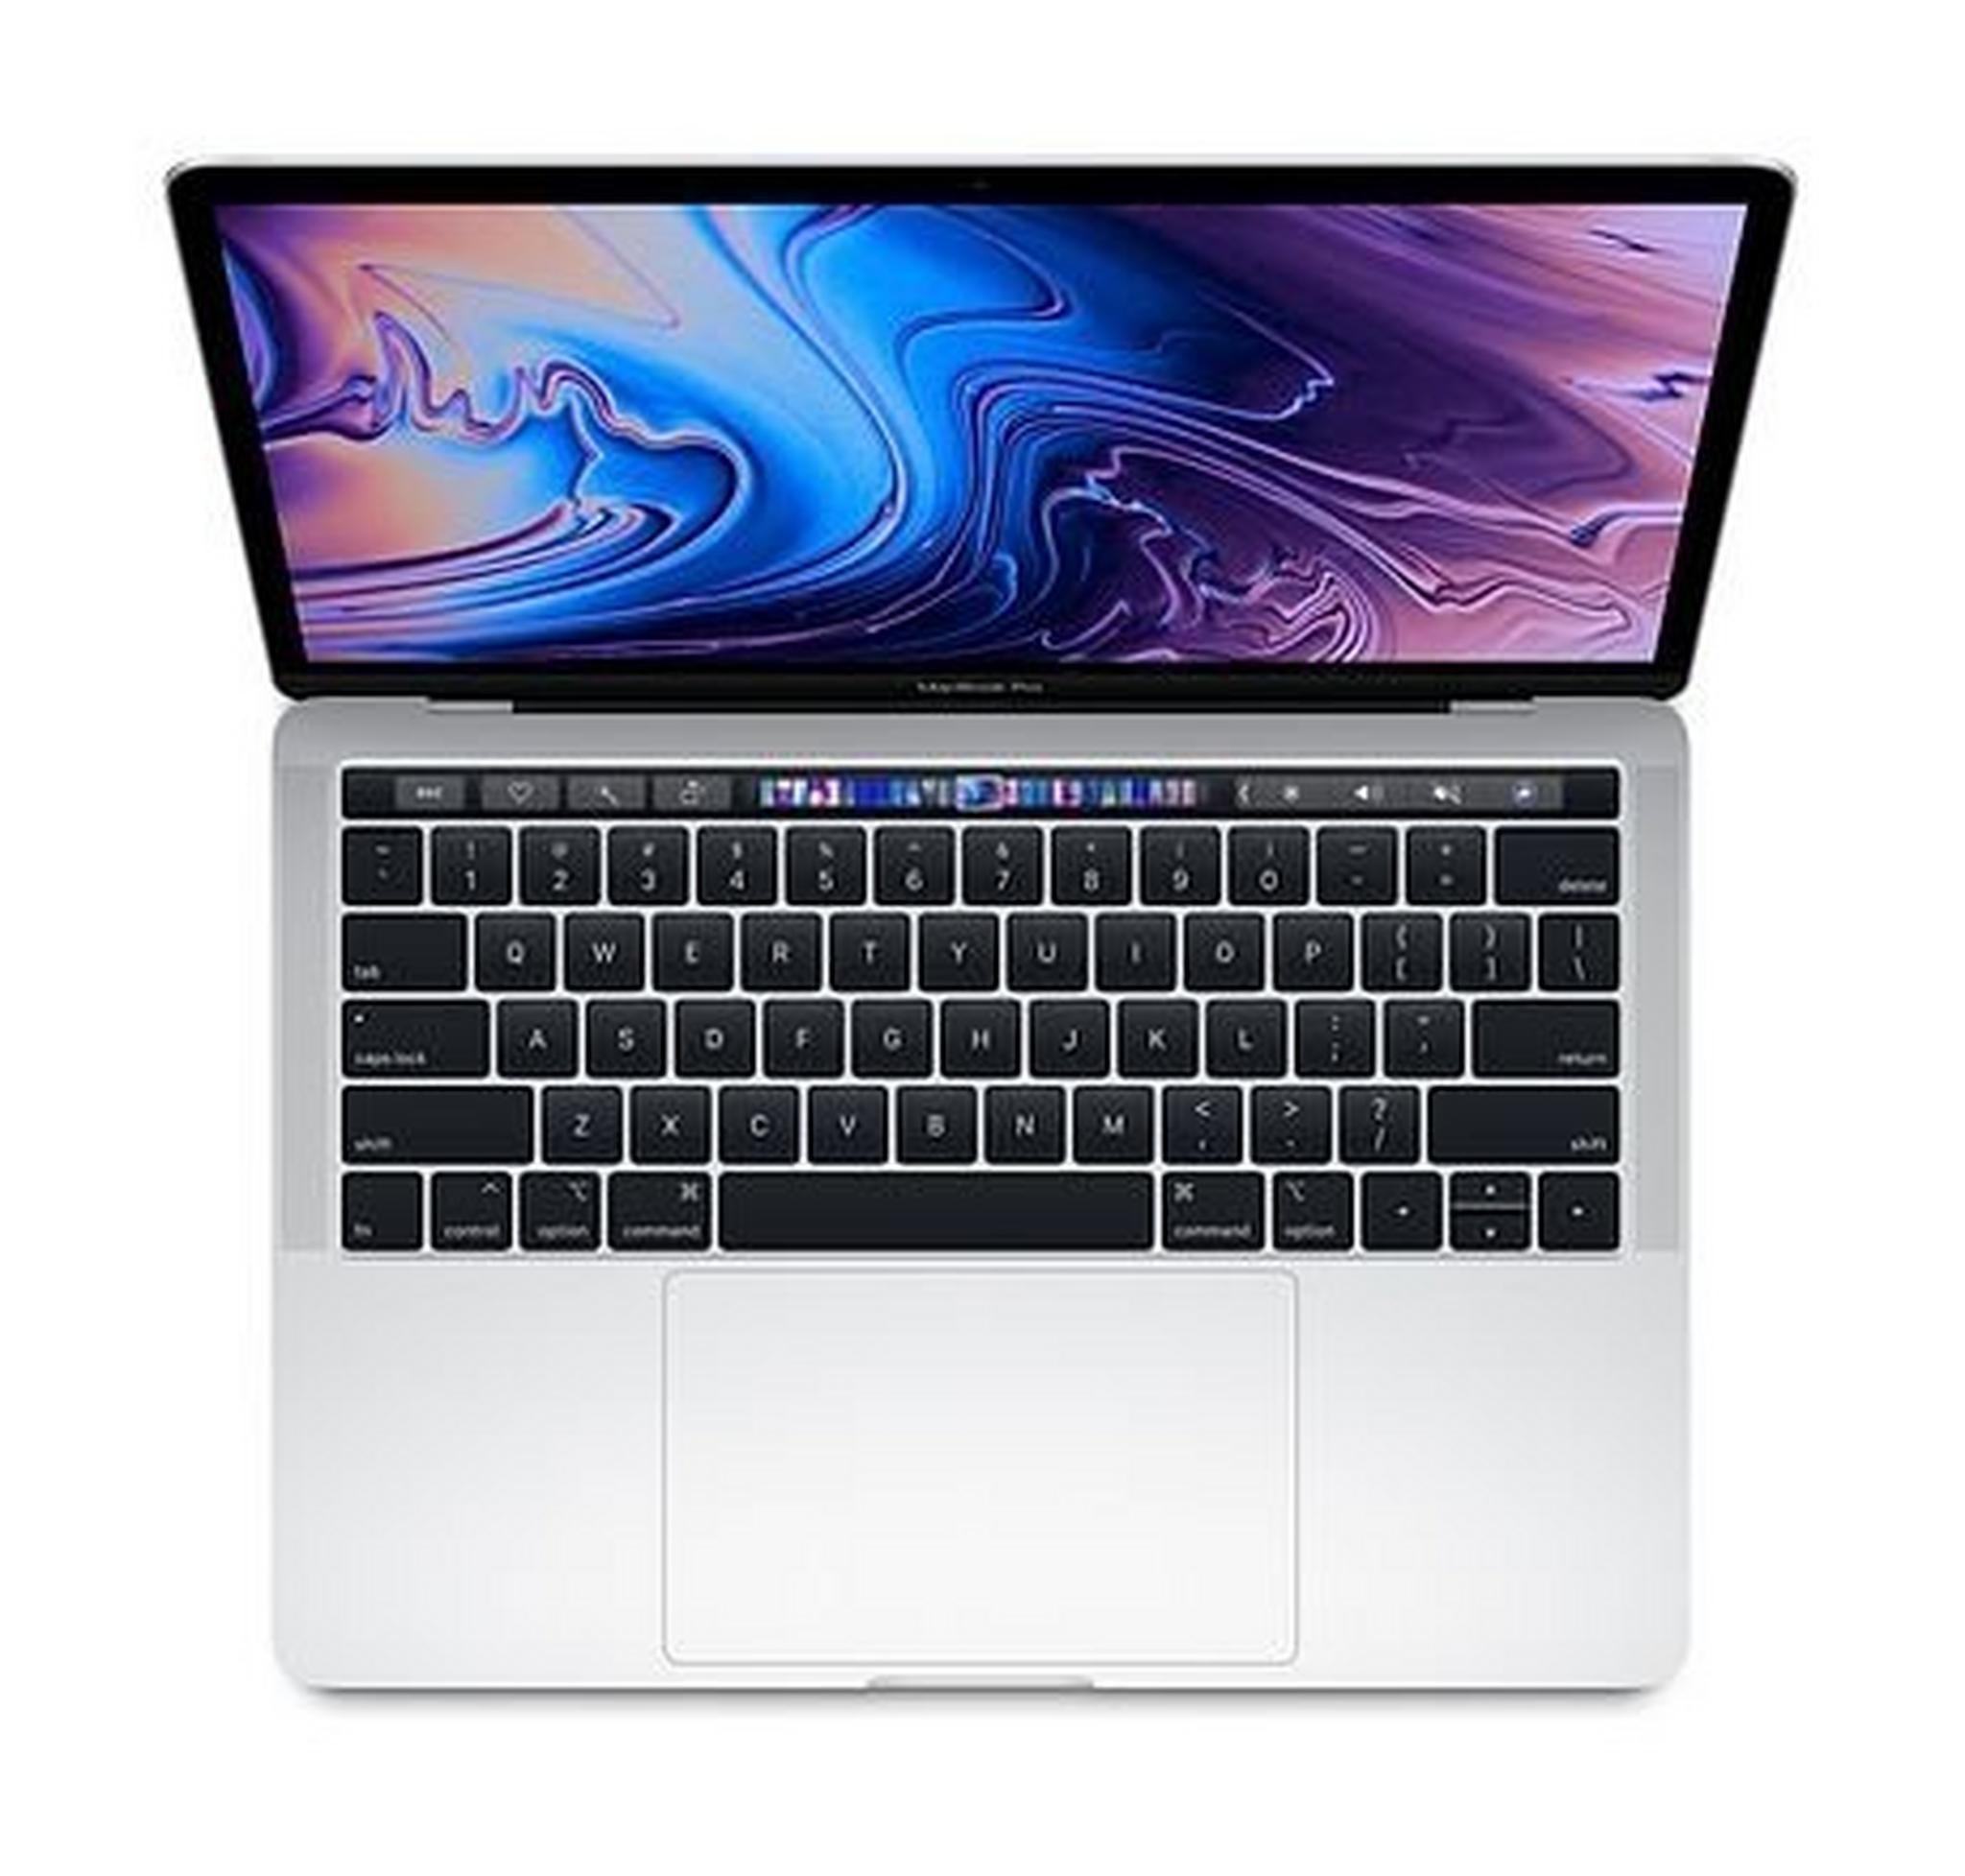 Apple Macbook Pro 2018 Core i5 8GB 256GB SSD 13.3 inch Laptop - Silver